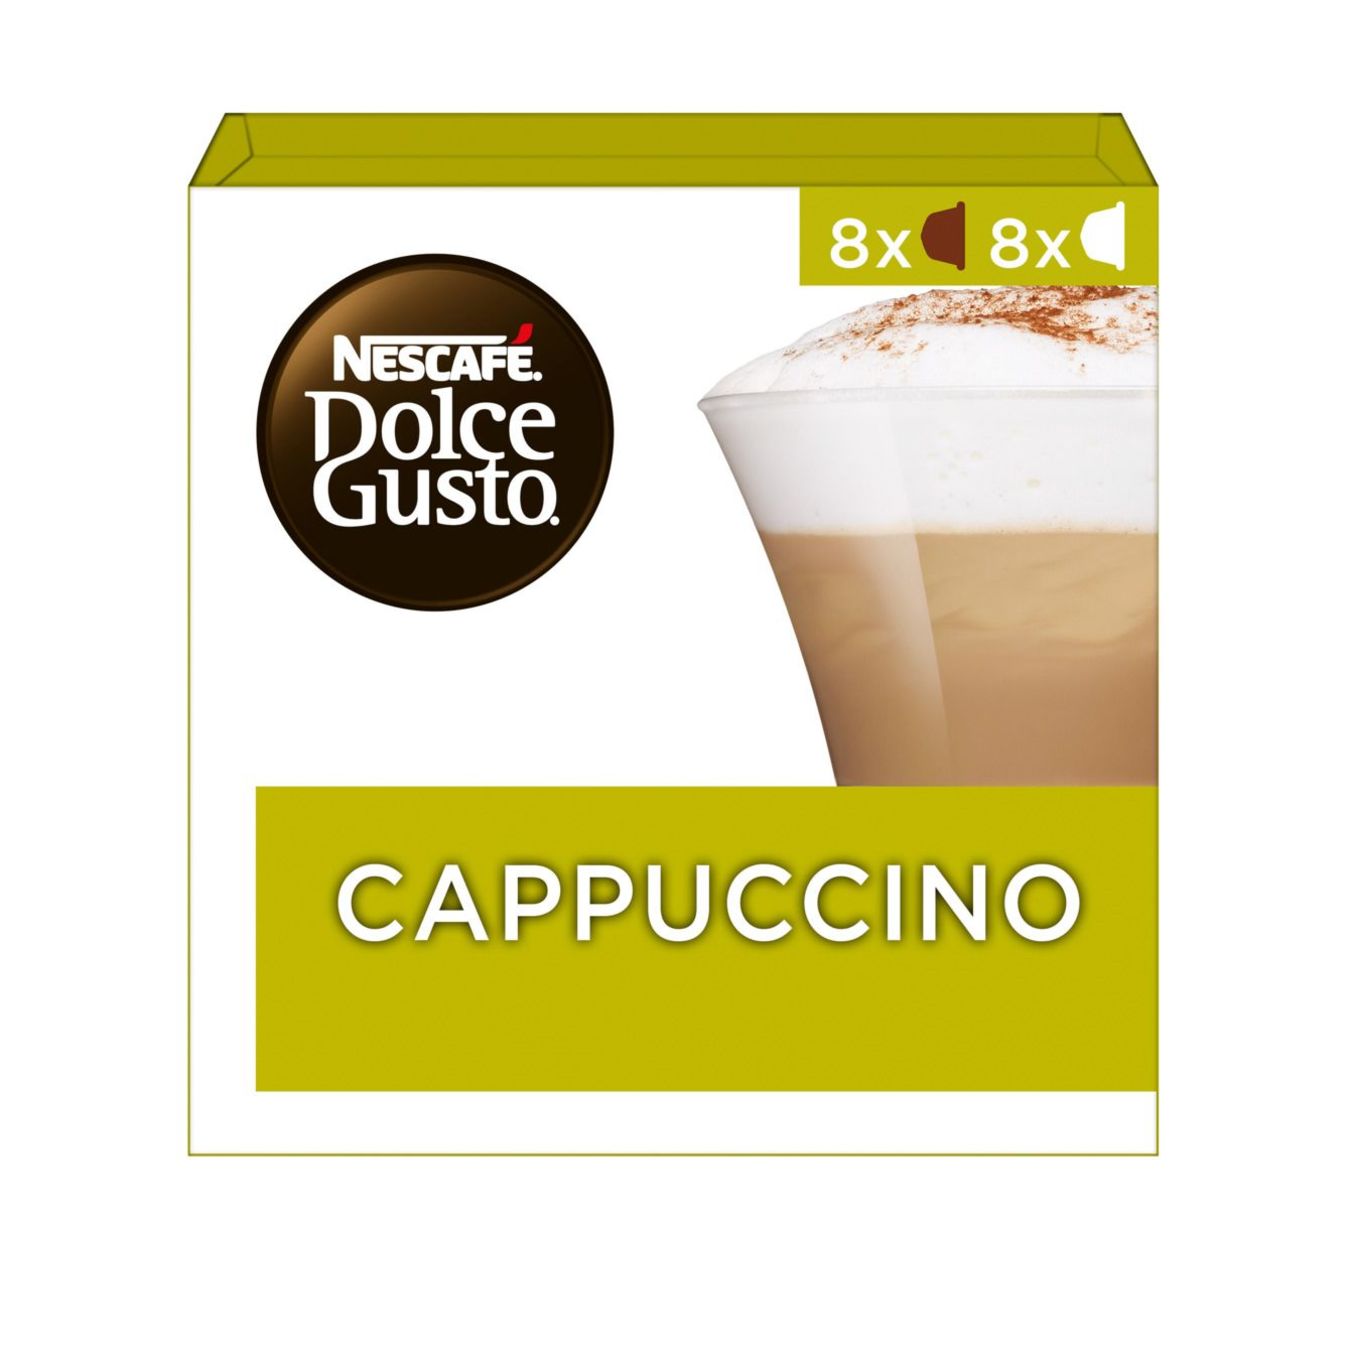 Nescafé Dolce gusto cappuccino capsules online bestellen? Coop.nl |